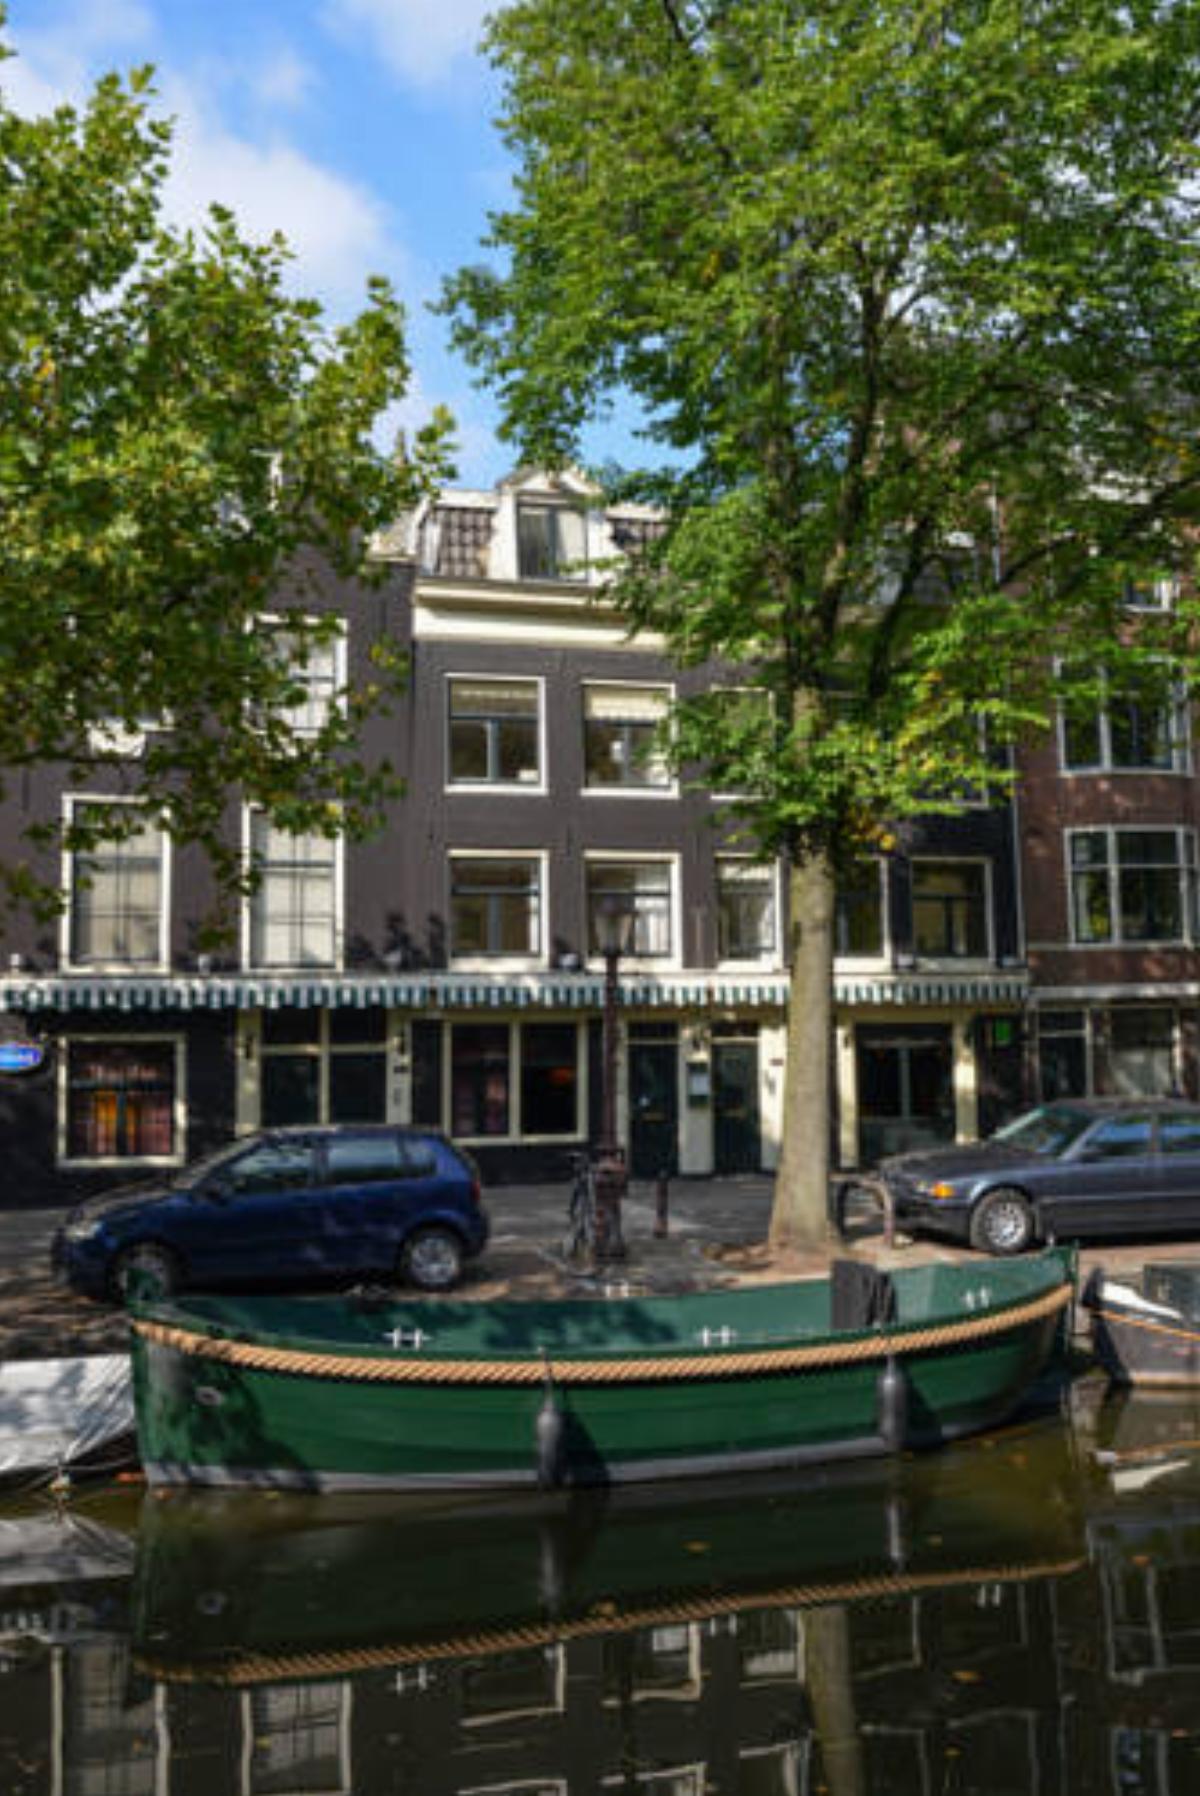 Green Apple Holiday - Lijnbaansgracht Hotel Amsterdam Netherlands